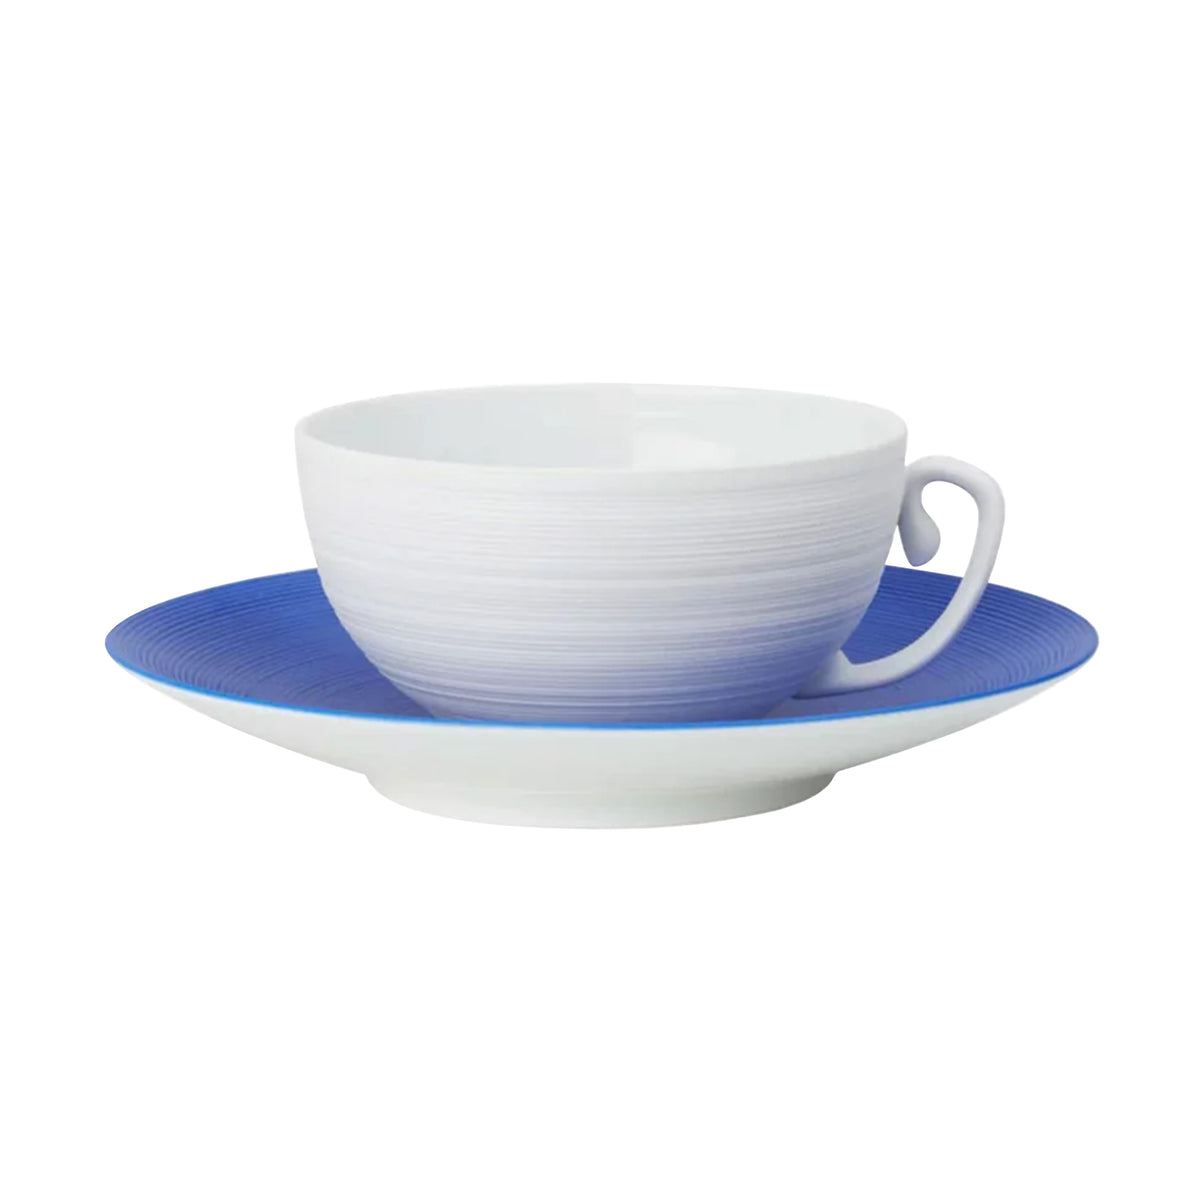 HEMISPHERE Royal Blue - Breakfast set (cup & saucer)